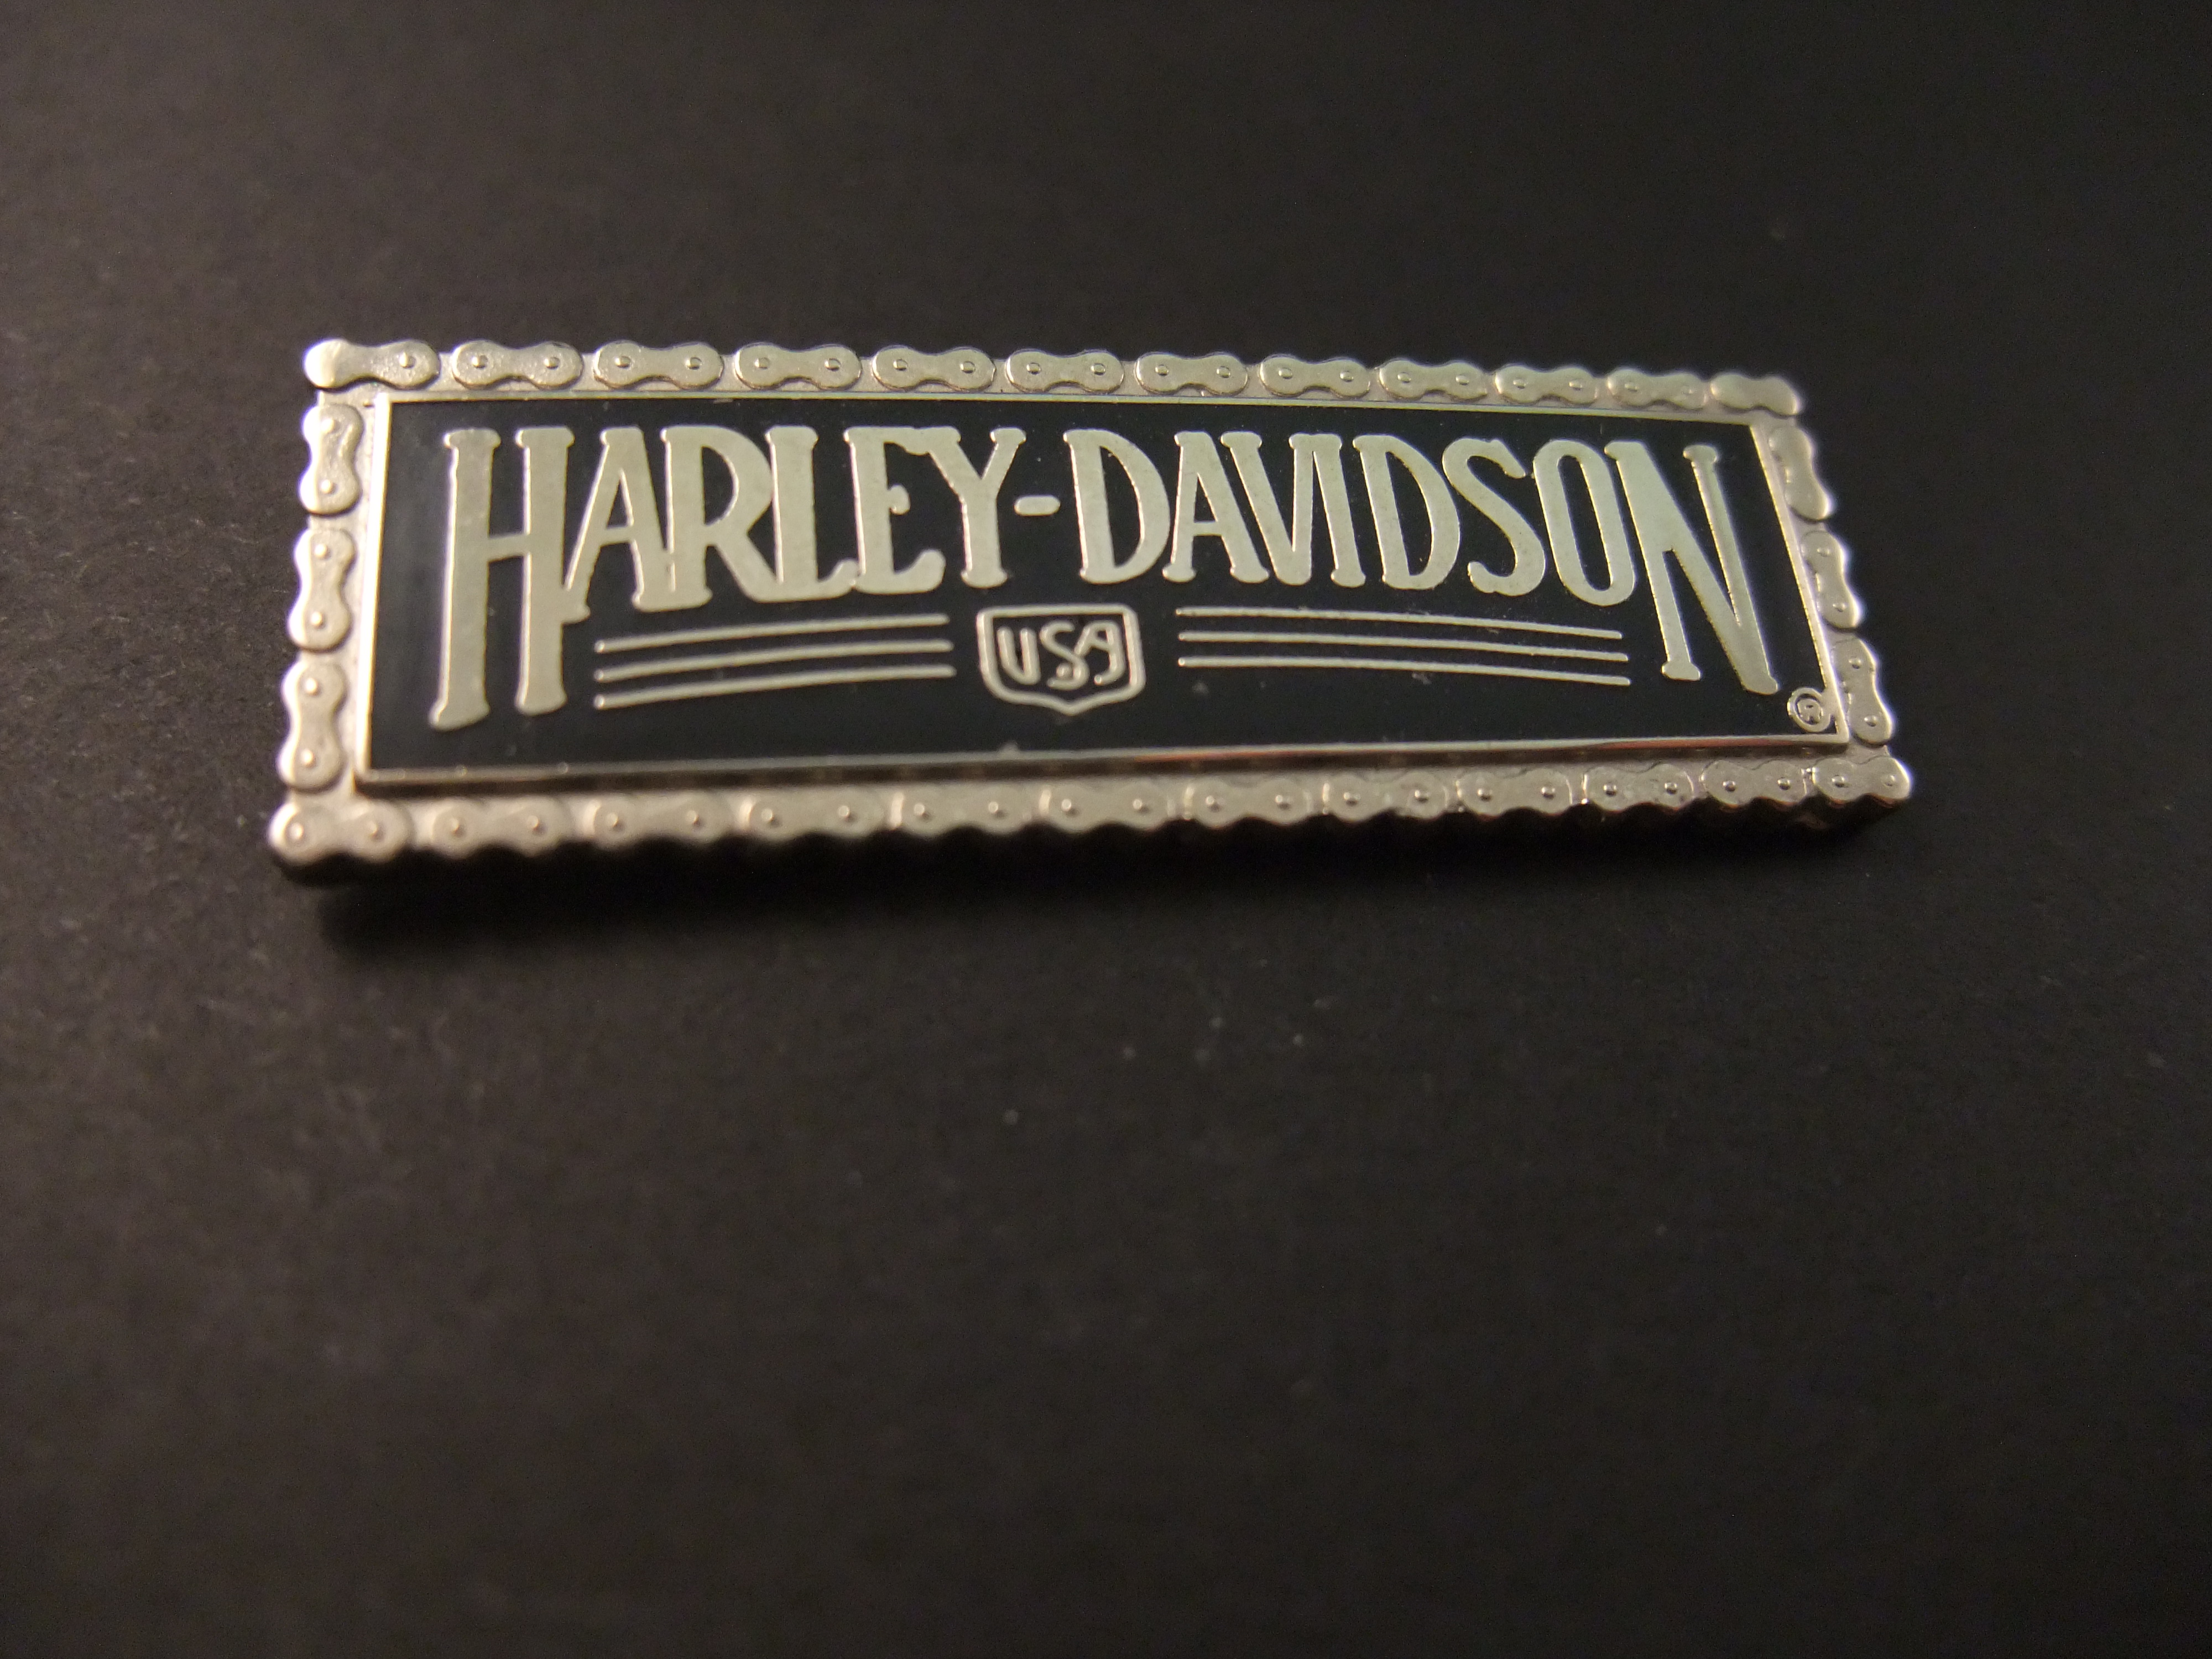 Harley- Davidson logo zilver-zwart logo met ketting omlijnd